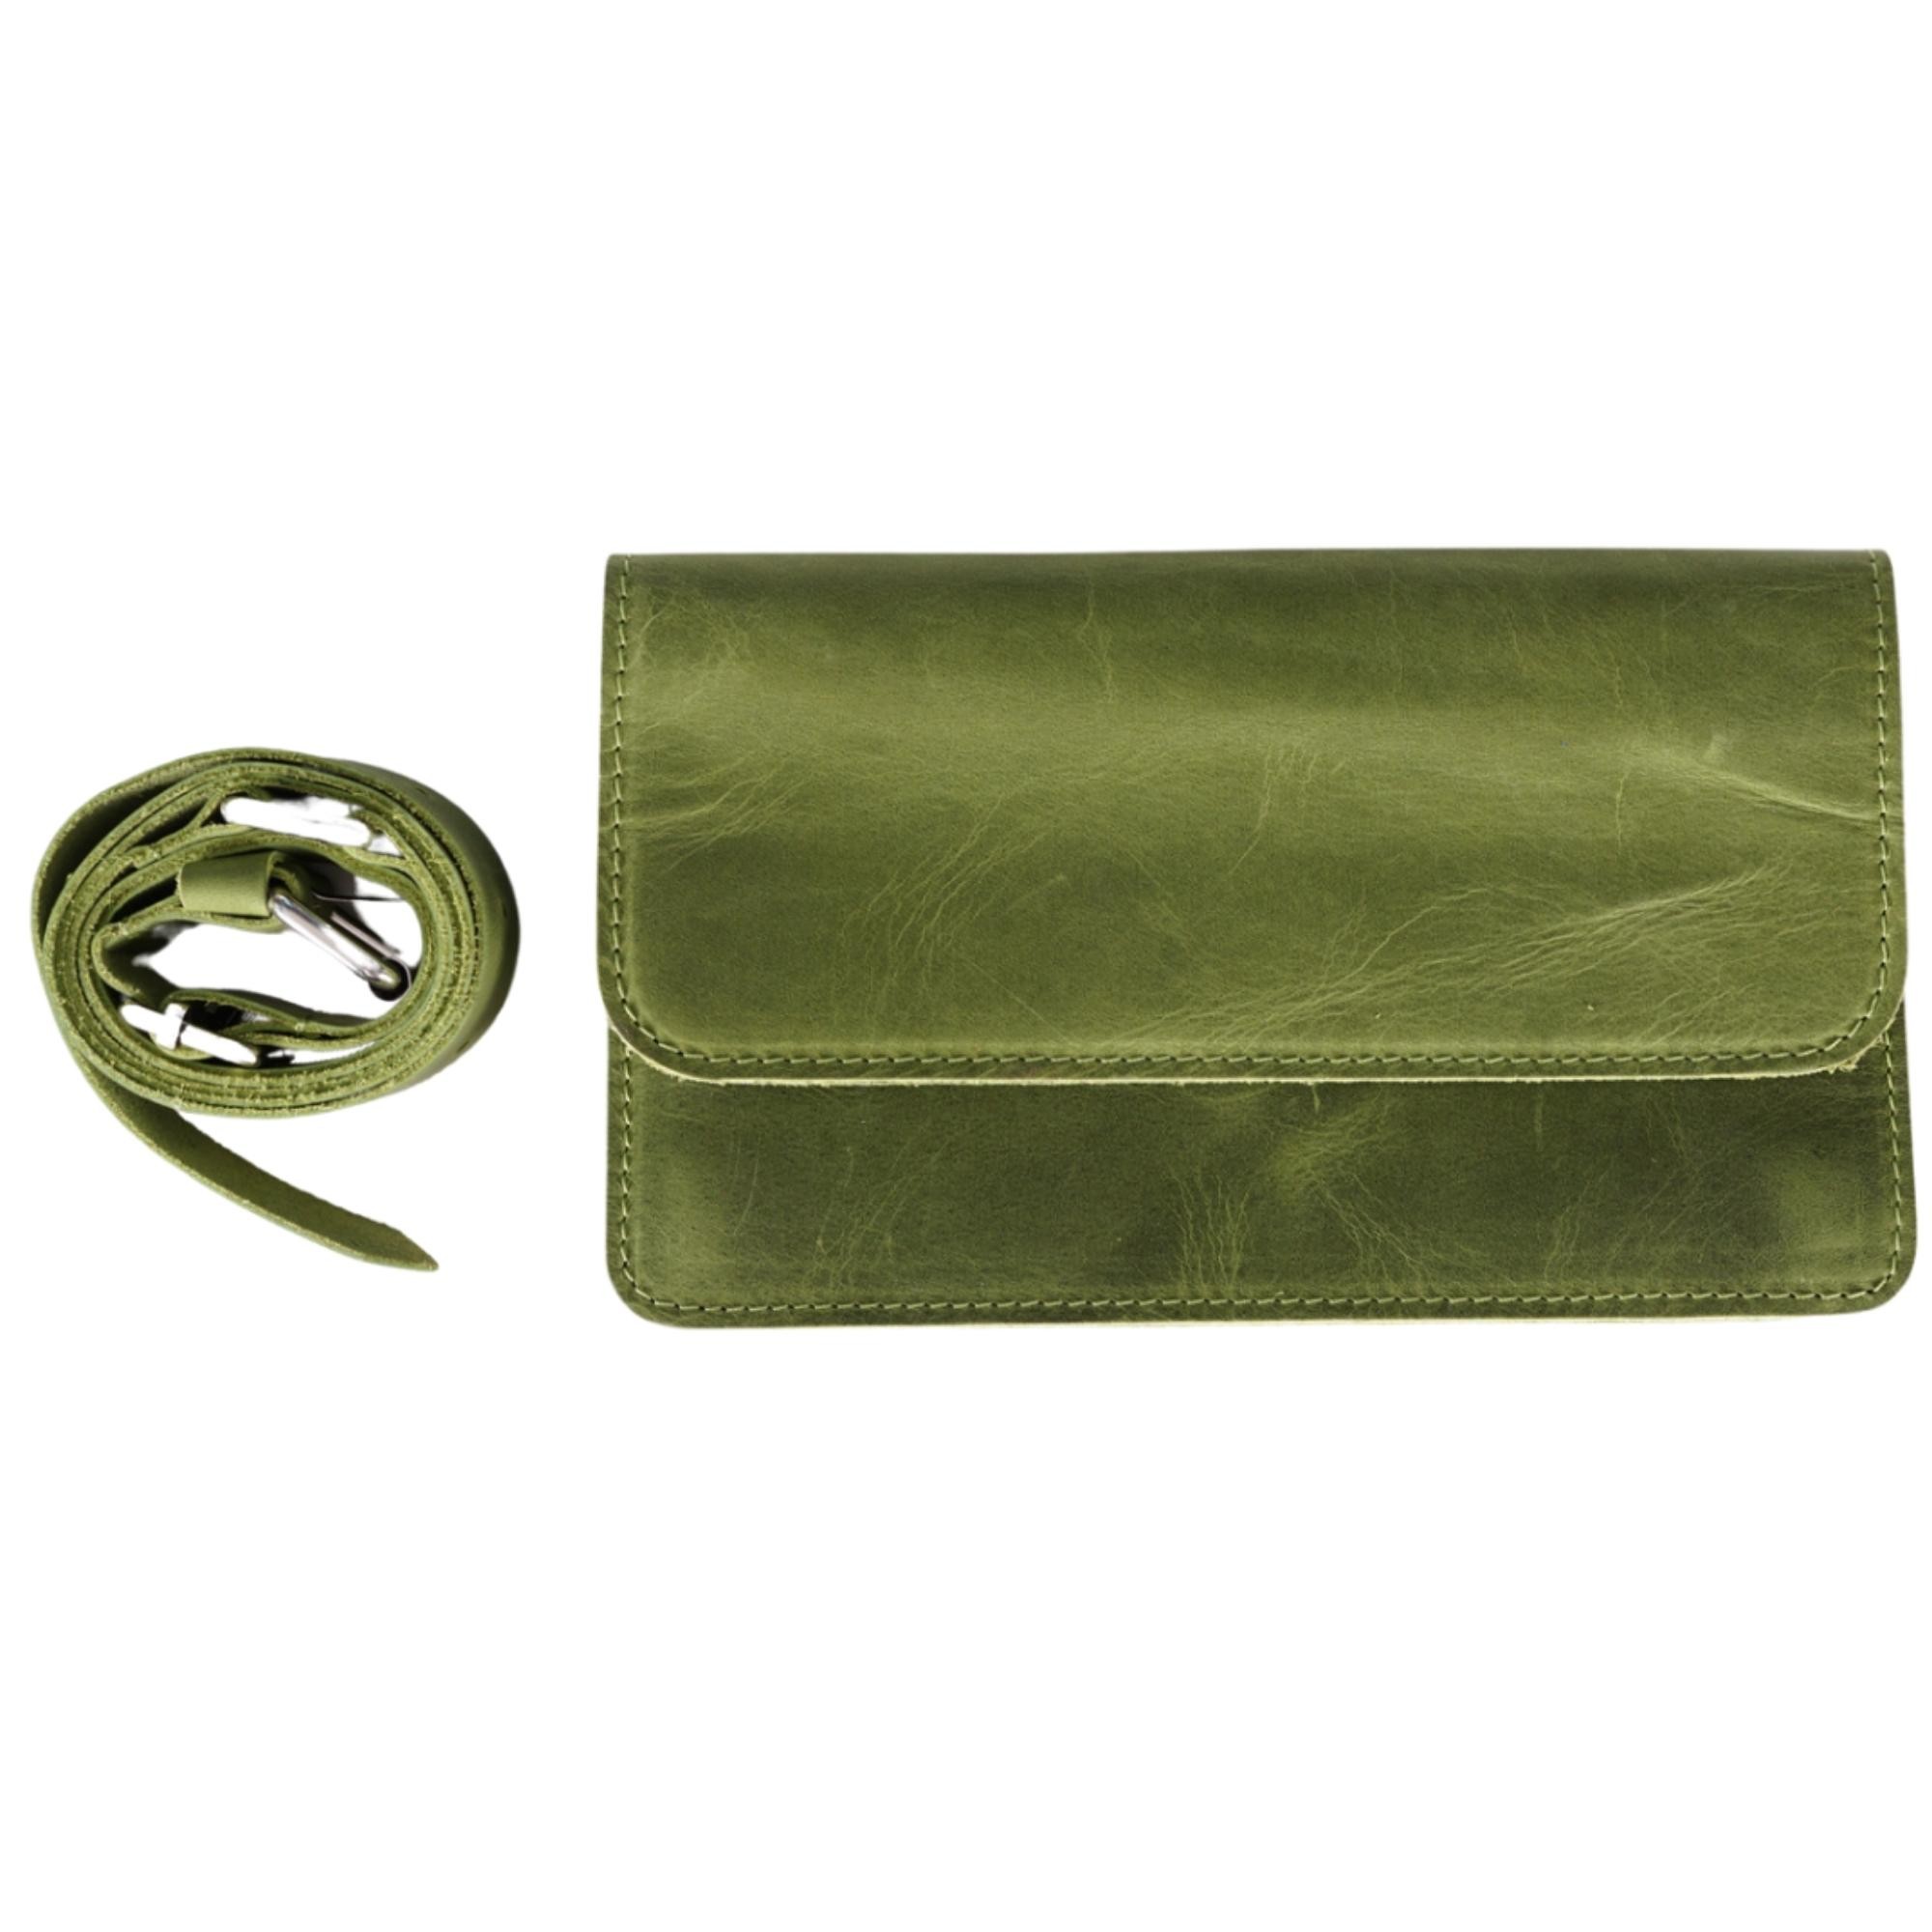 Customizable Adjustable Women's Shoulder and Waist Bag Sepia - Green